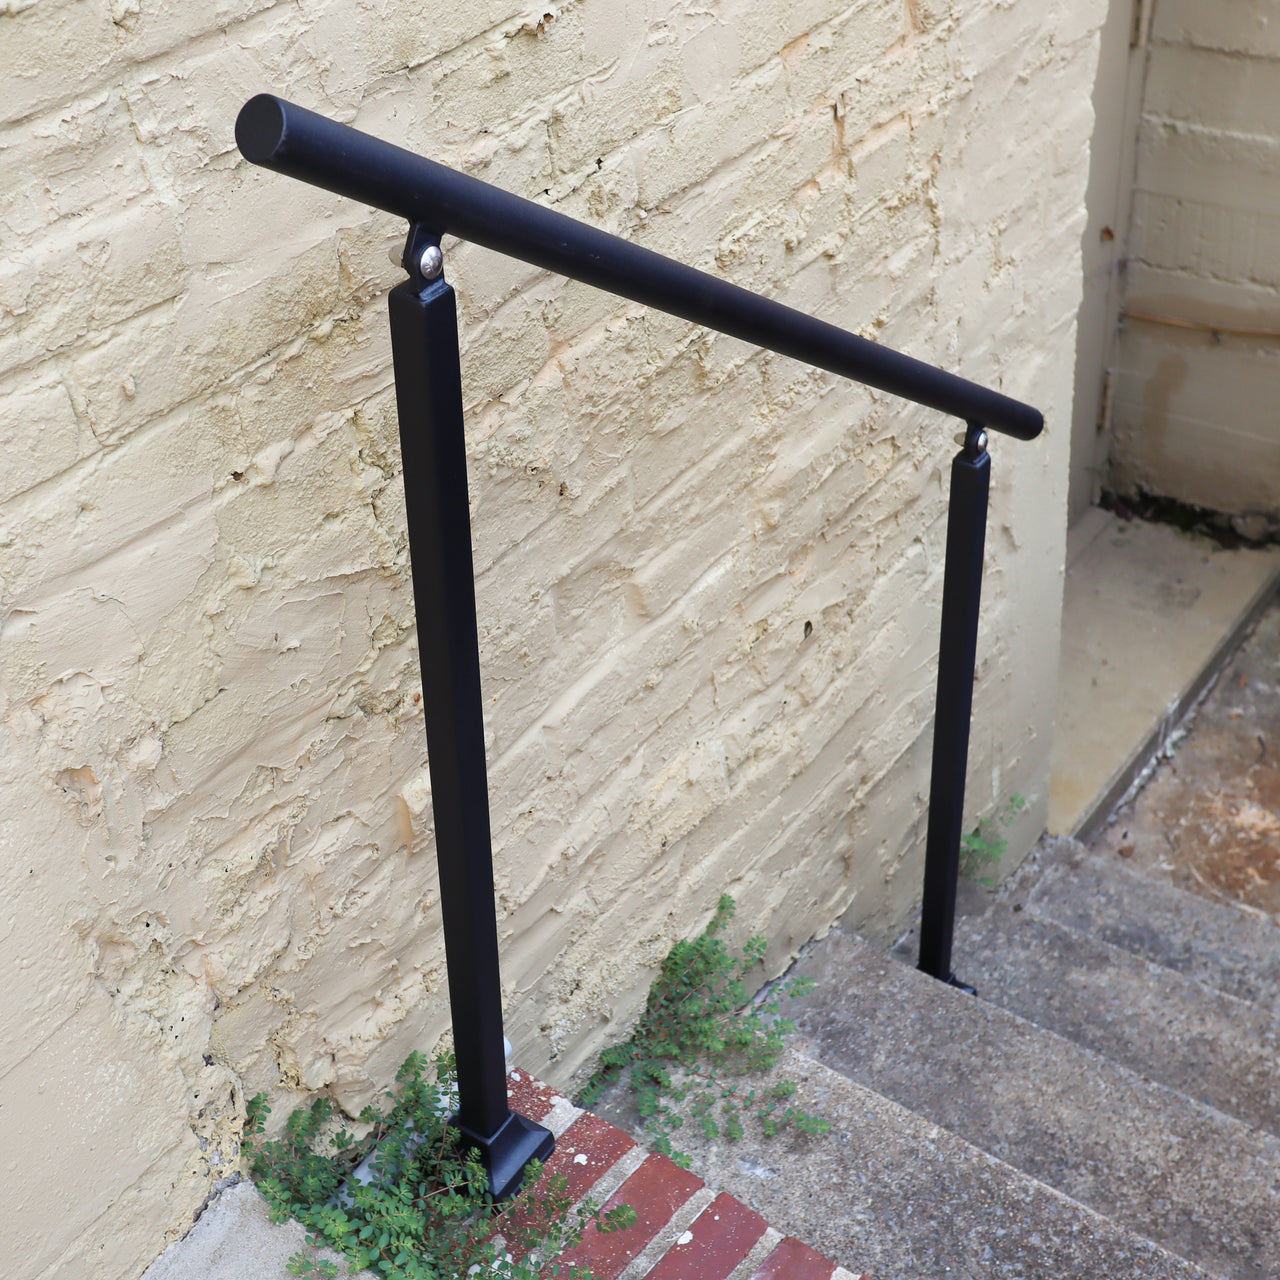 Adjustable Metal Handrail with Modern Design - Make A Rail Grab Rail - Minimalist Stair Decor